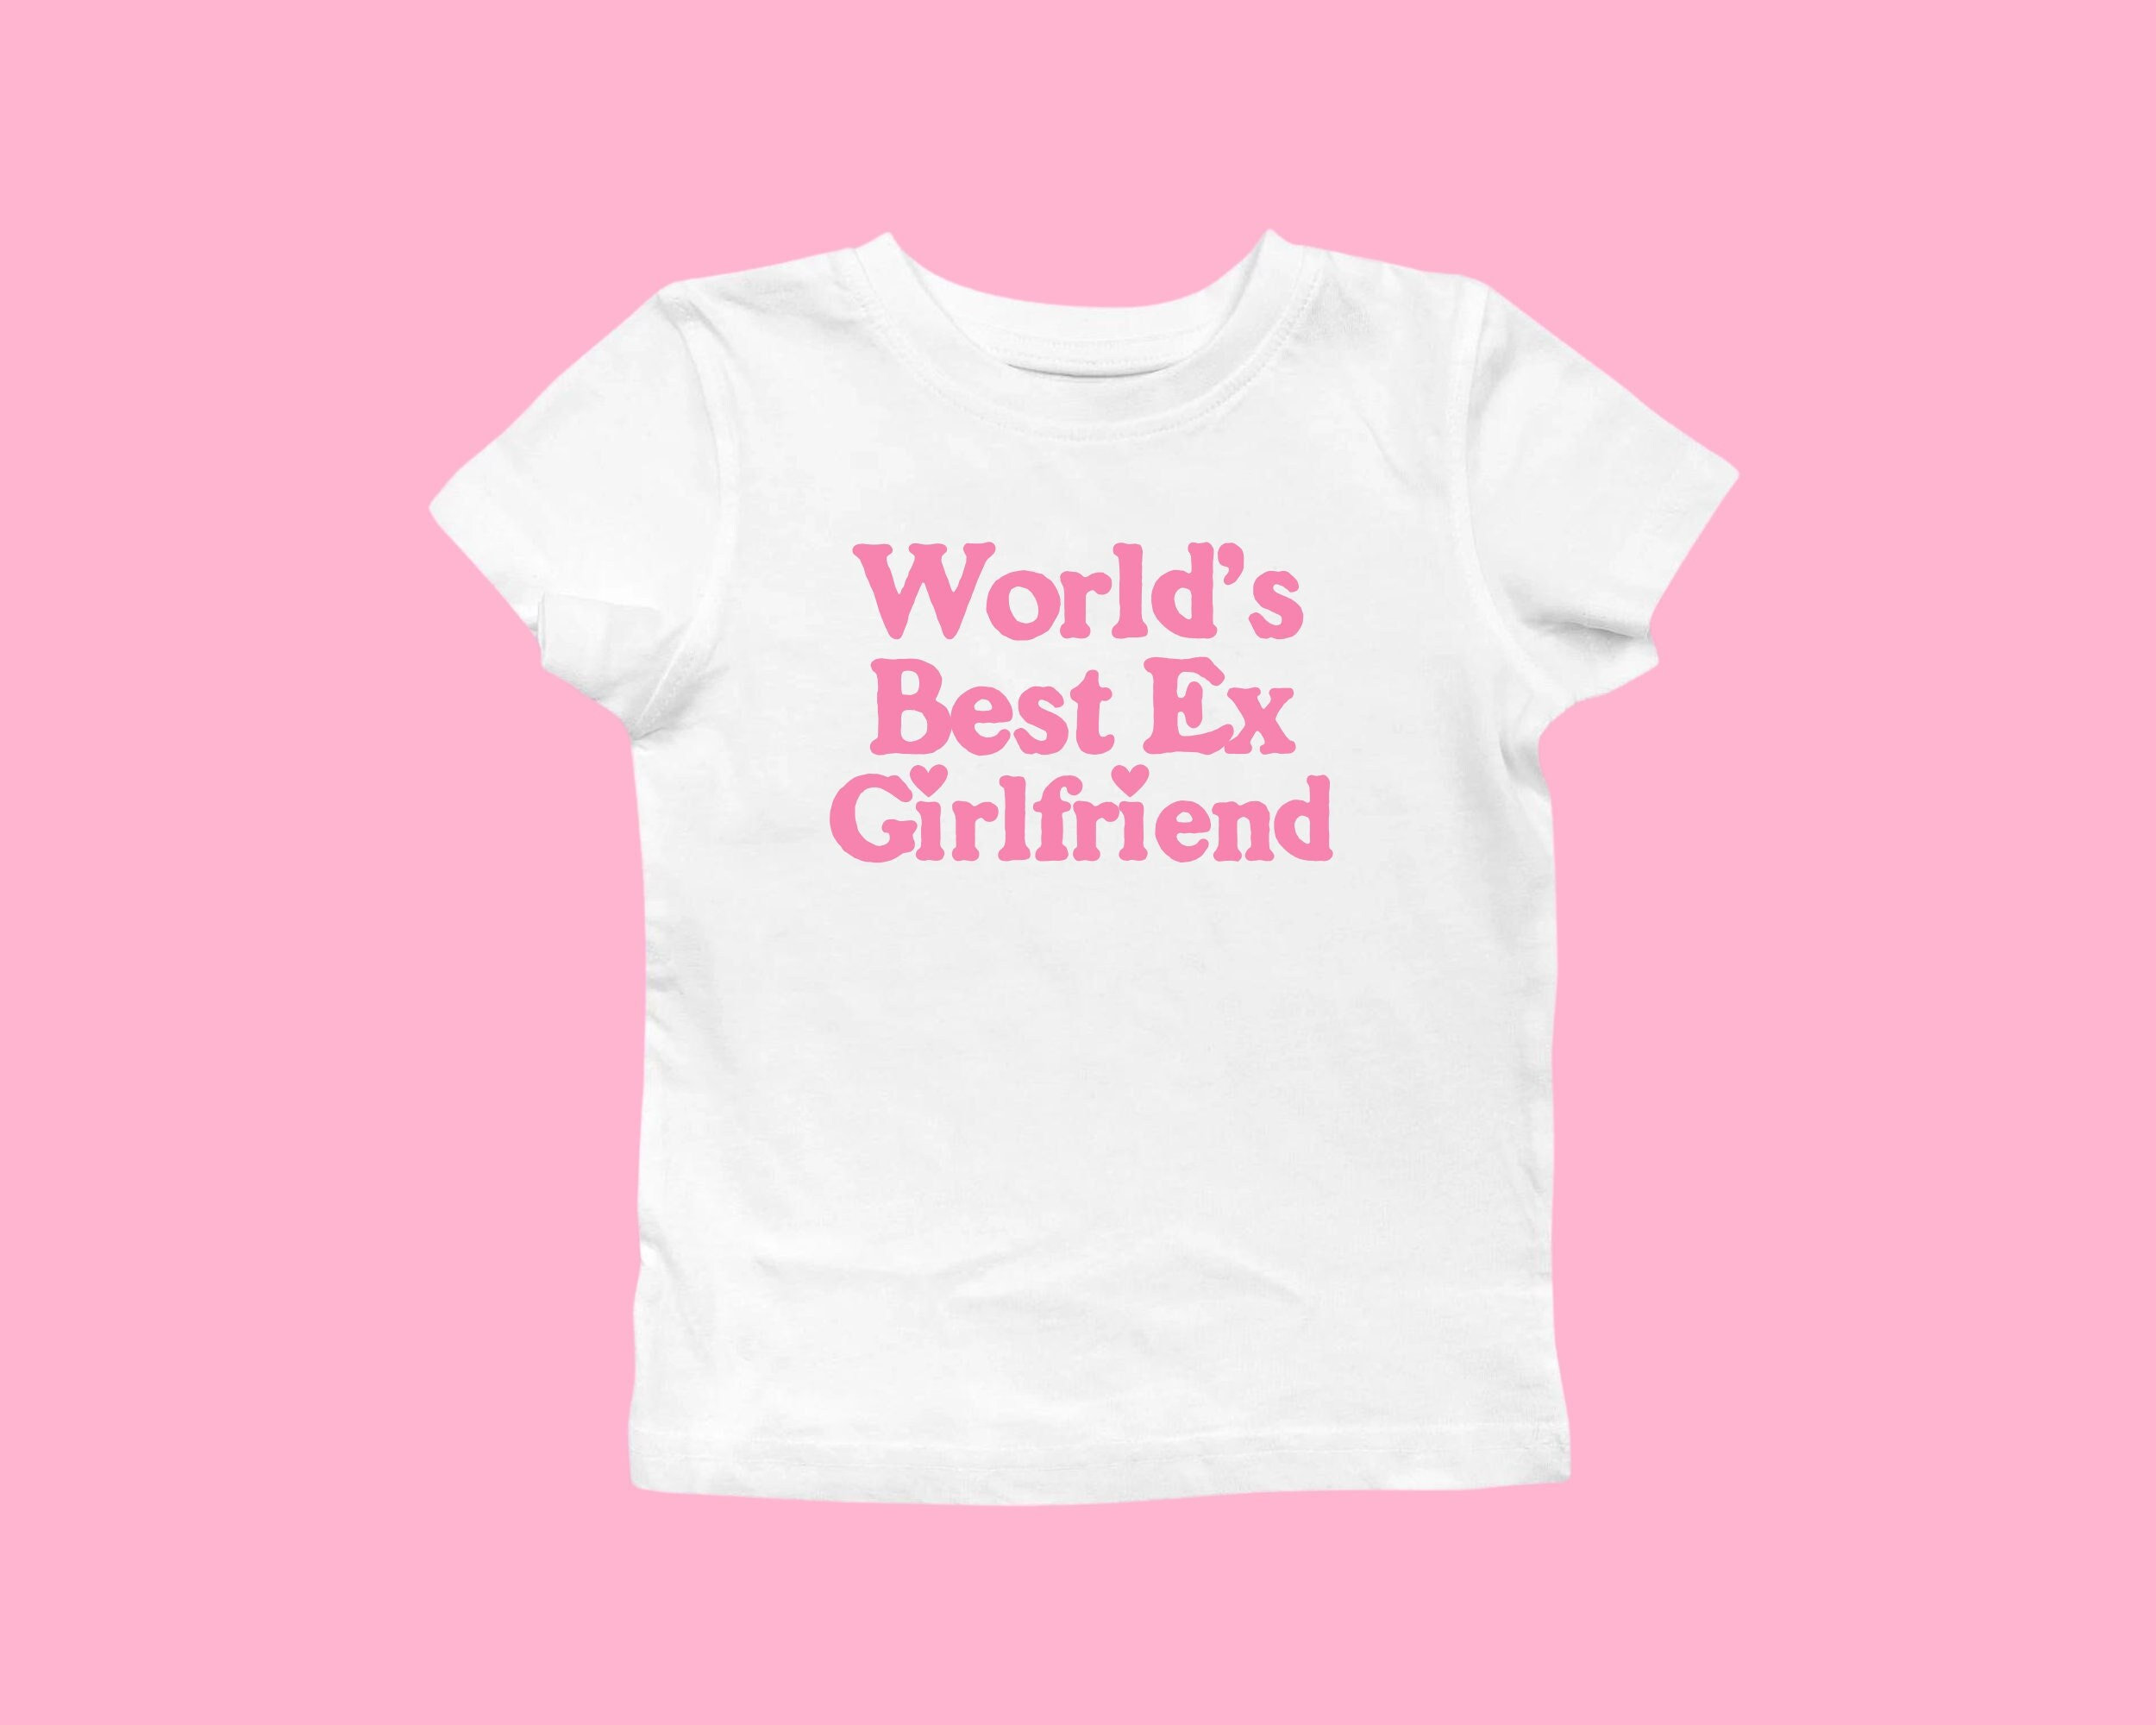 Trendy Y2K Style Ex Girlfriend Gift: Retro Inspired Baby Tee